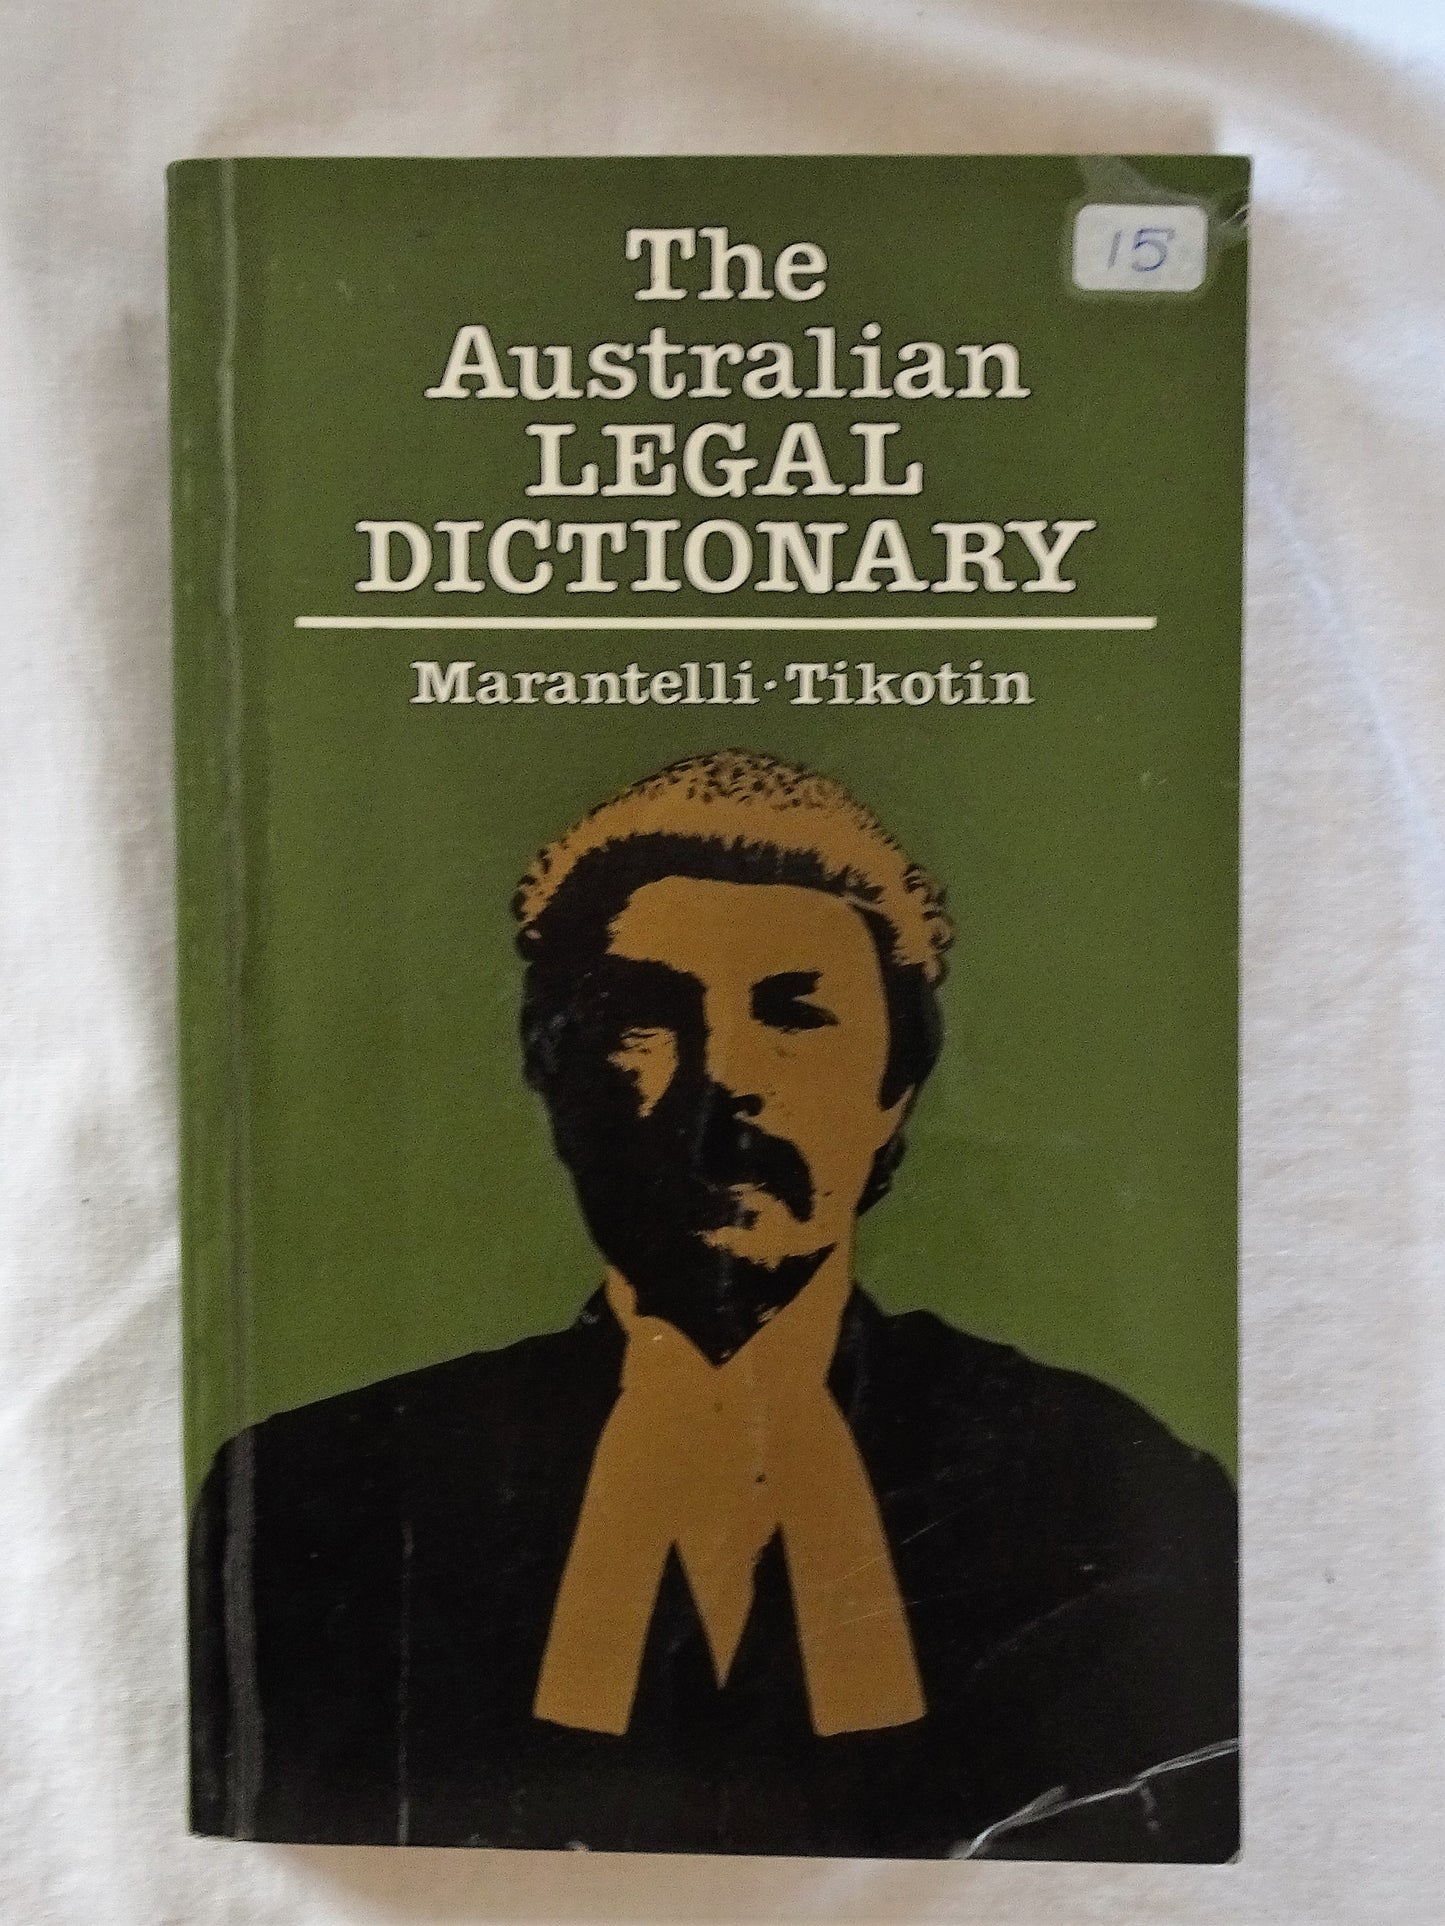 The Australian Legal Dictionary by Stephen Marantelli and Celia Tikotin